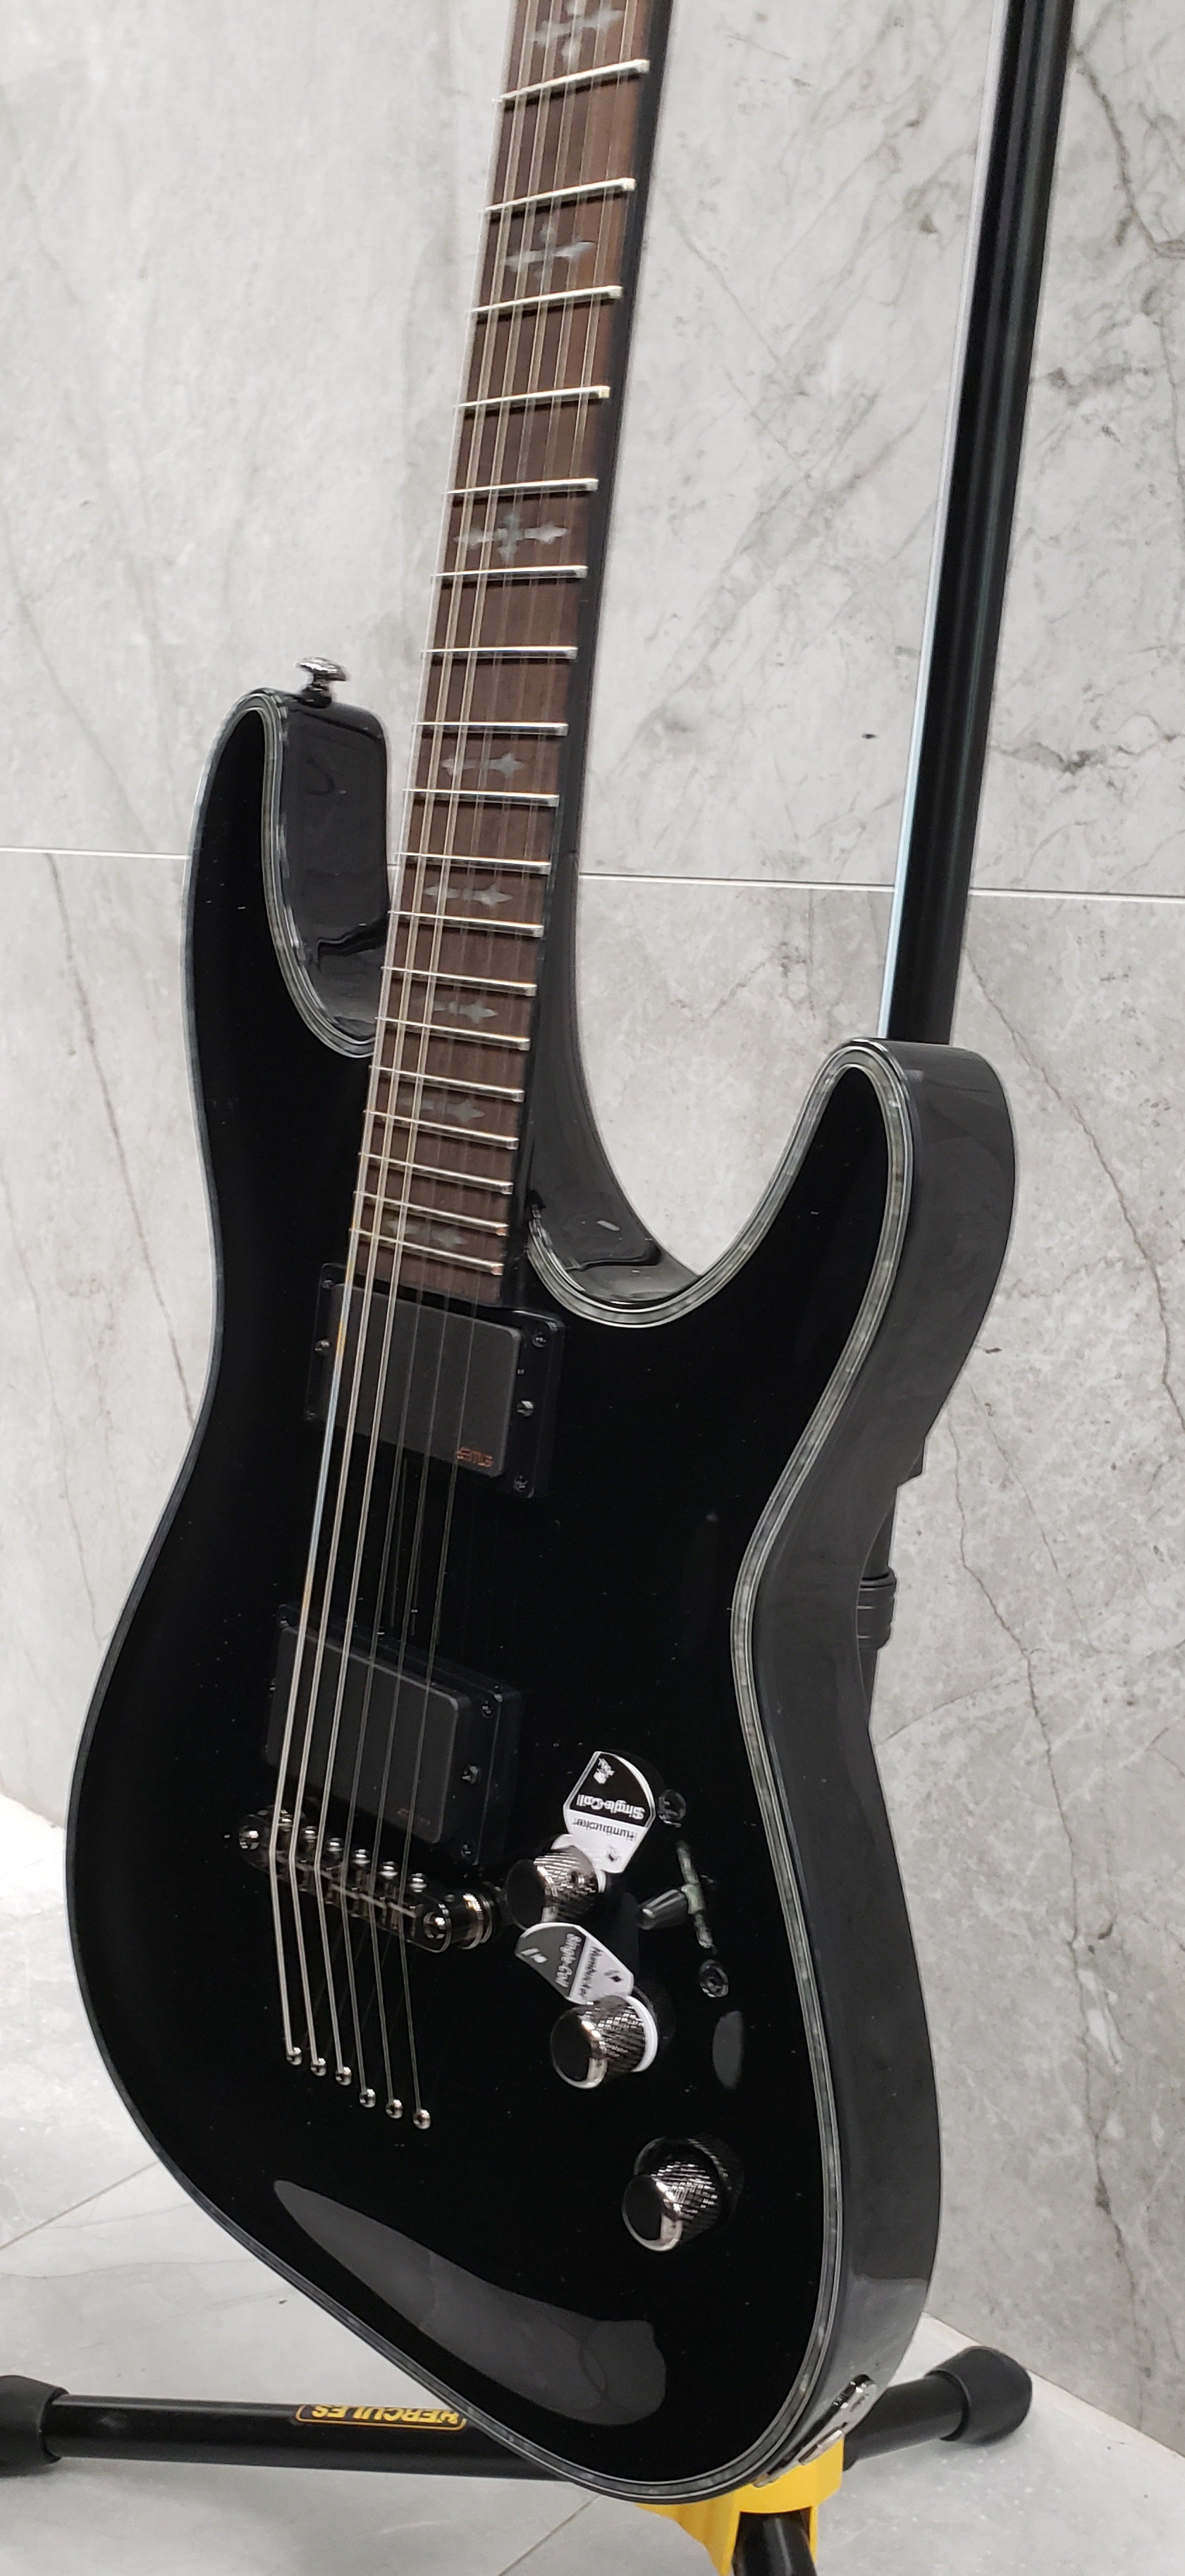 Schecter C-1 Hellraiser Series HR-C-1-BLK Gloss Black Guitar with EMG 81TW 89 Pickups 1787-SHC